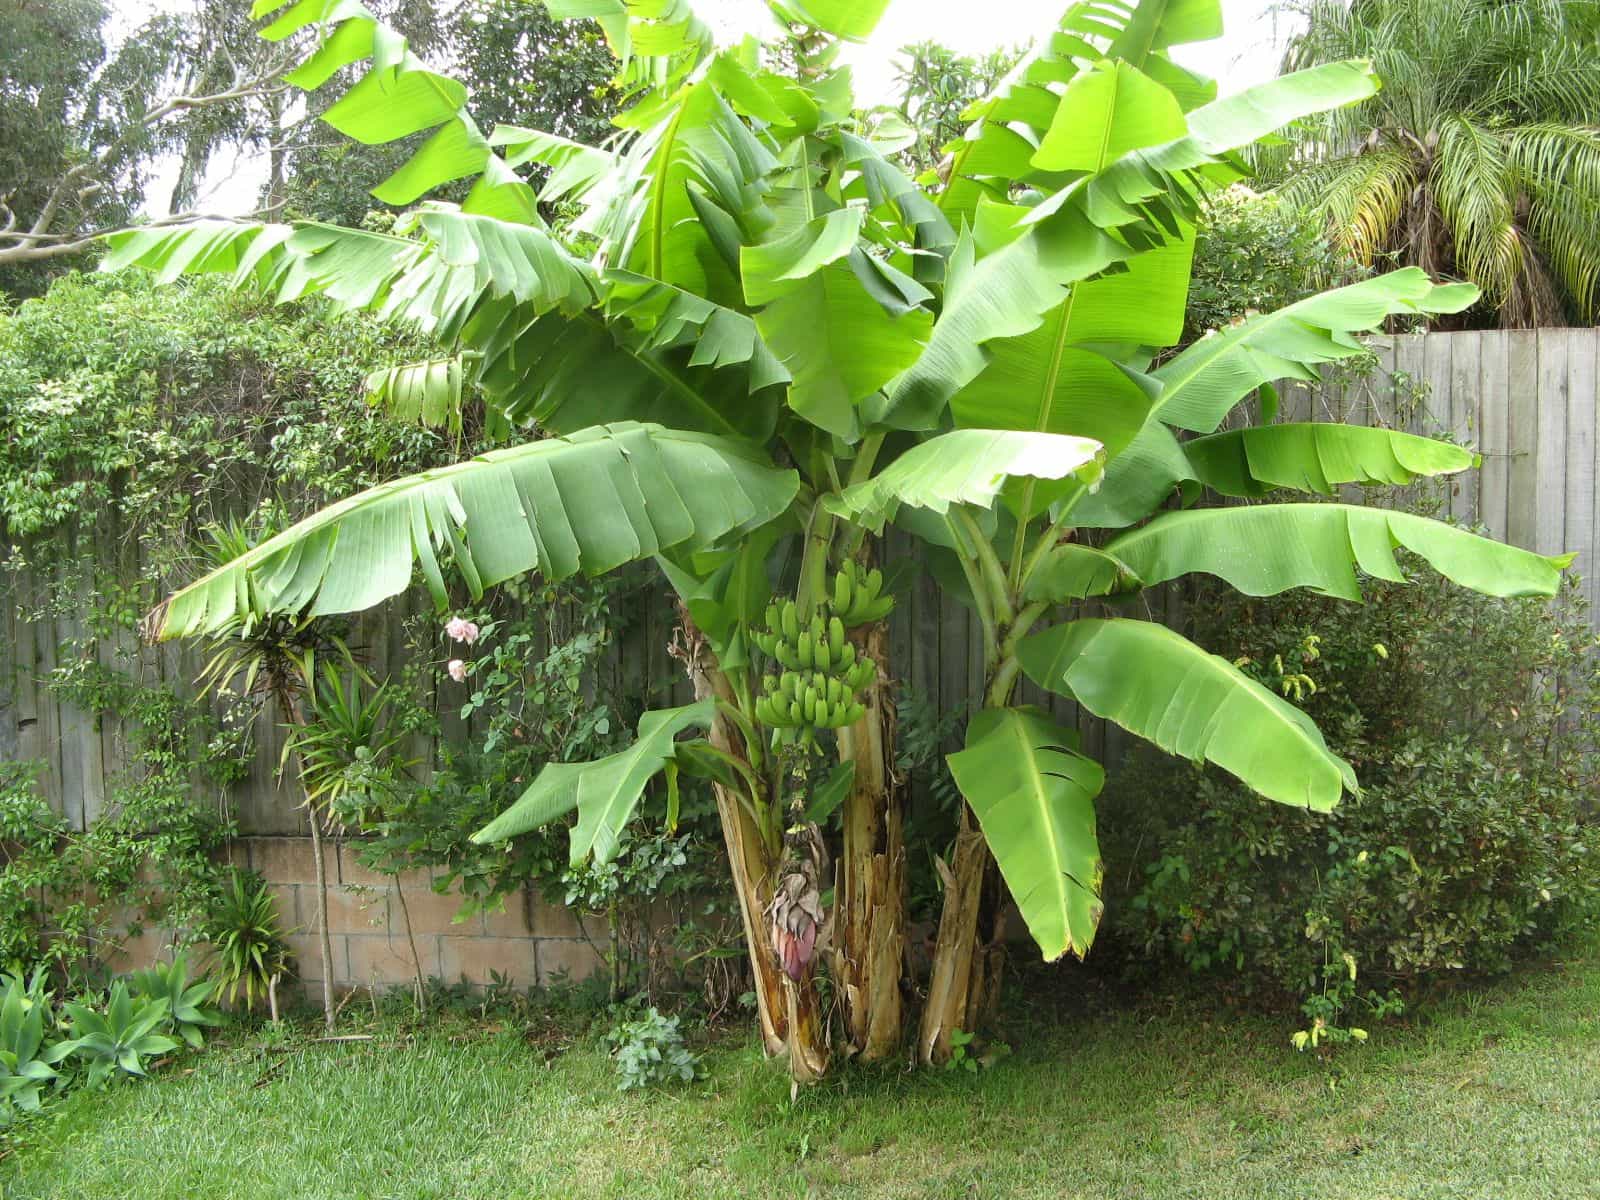 Outdoor Banana Trees In The Garden - Growing Banana Trees In Your ...